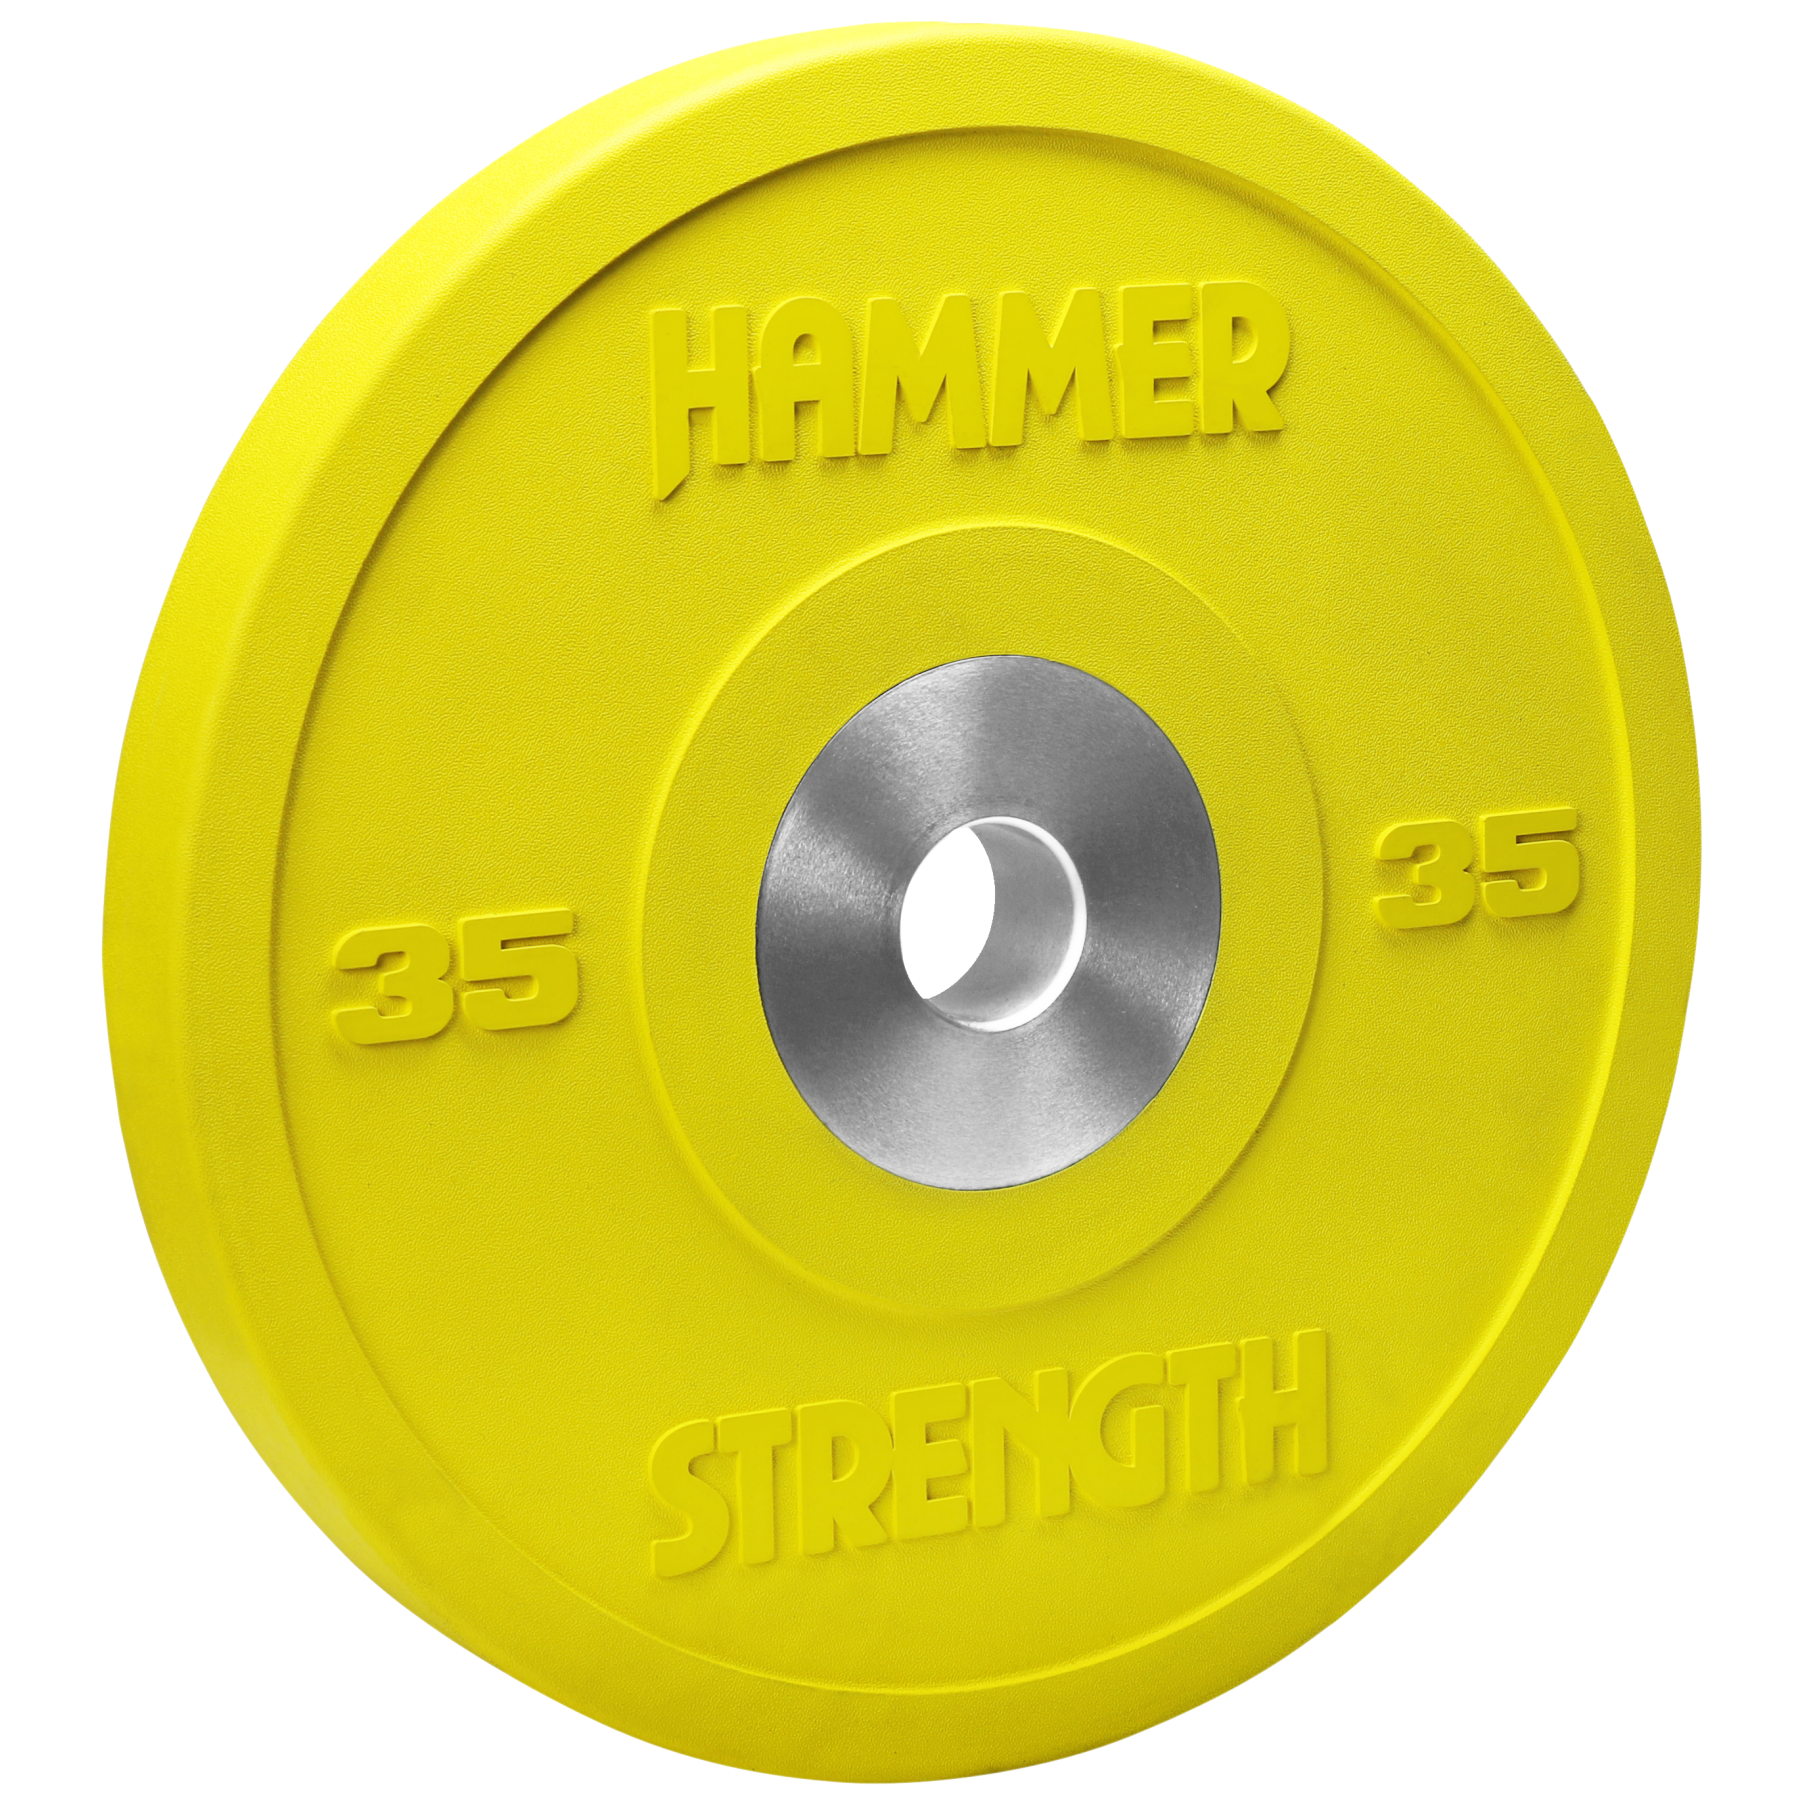 Hammer Strength Premium Rubber Color Bumper - 35 lbs. yellow